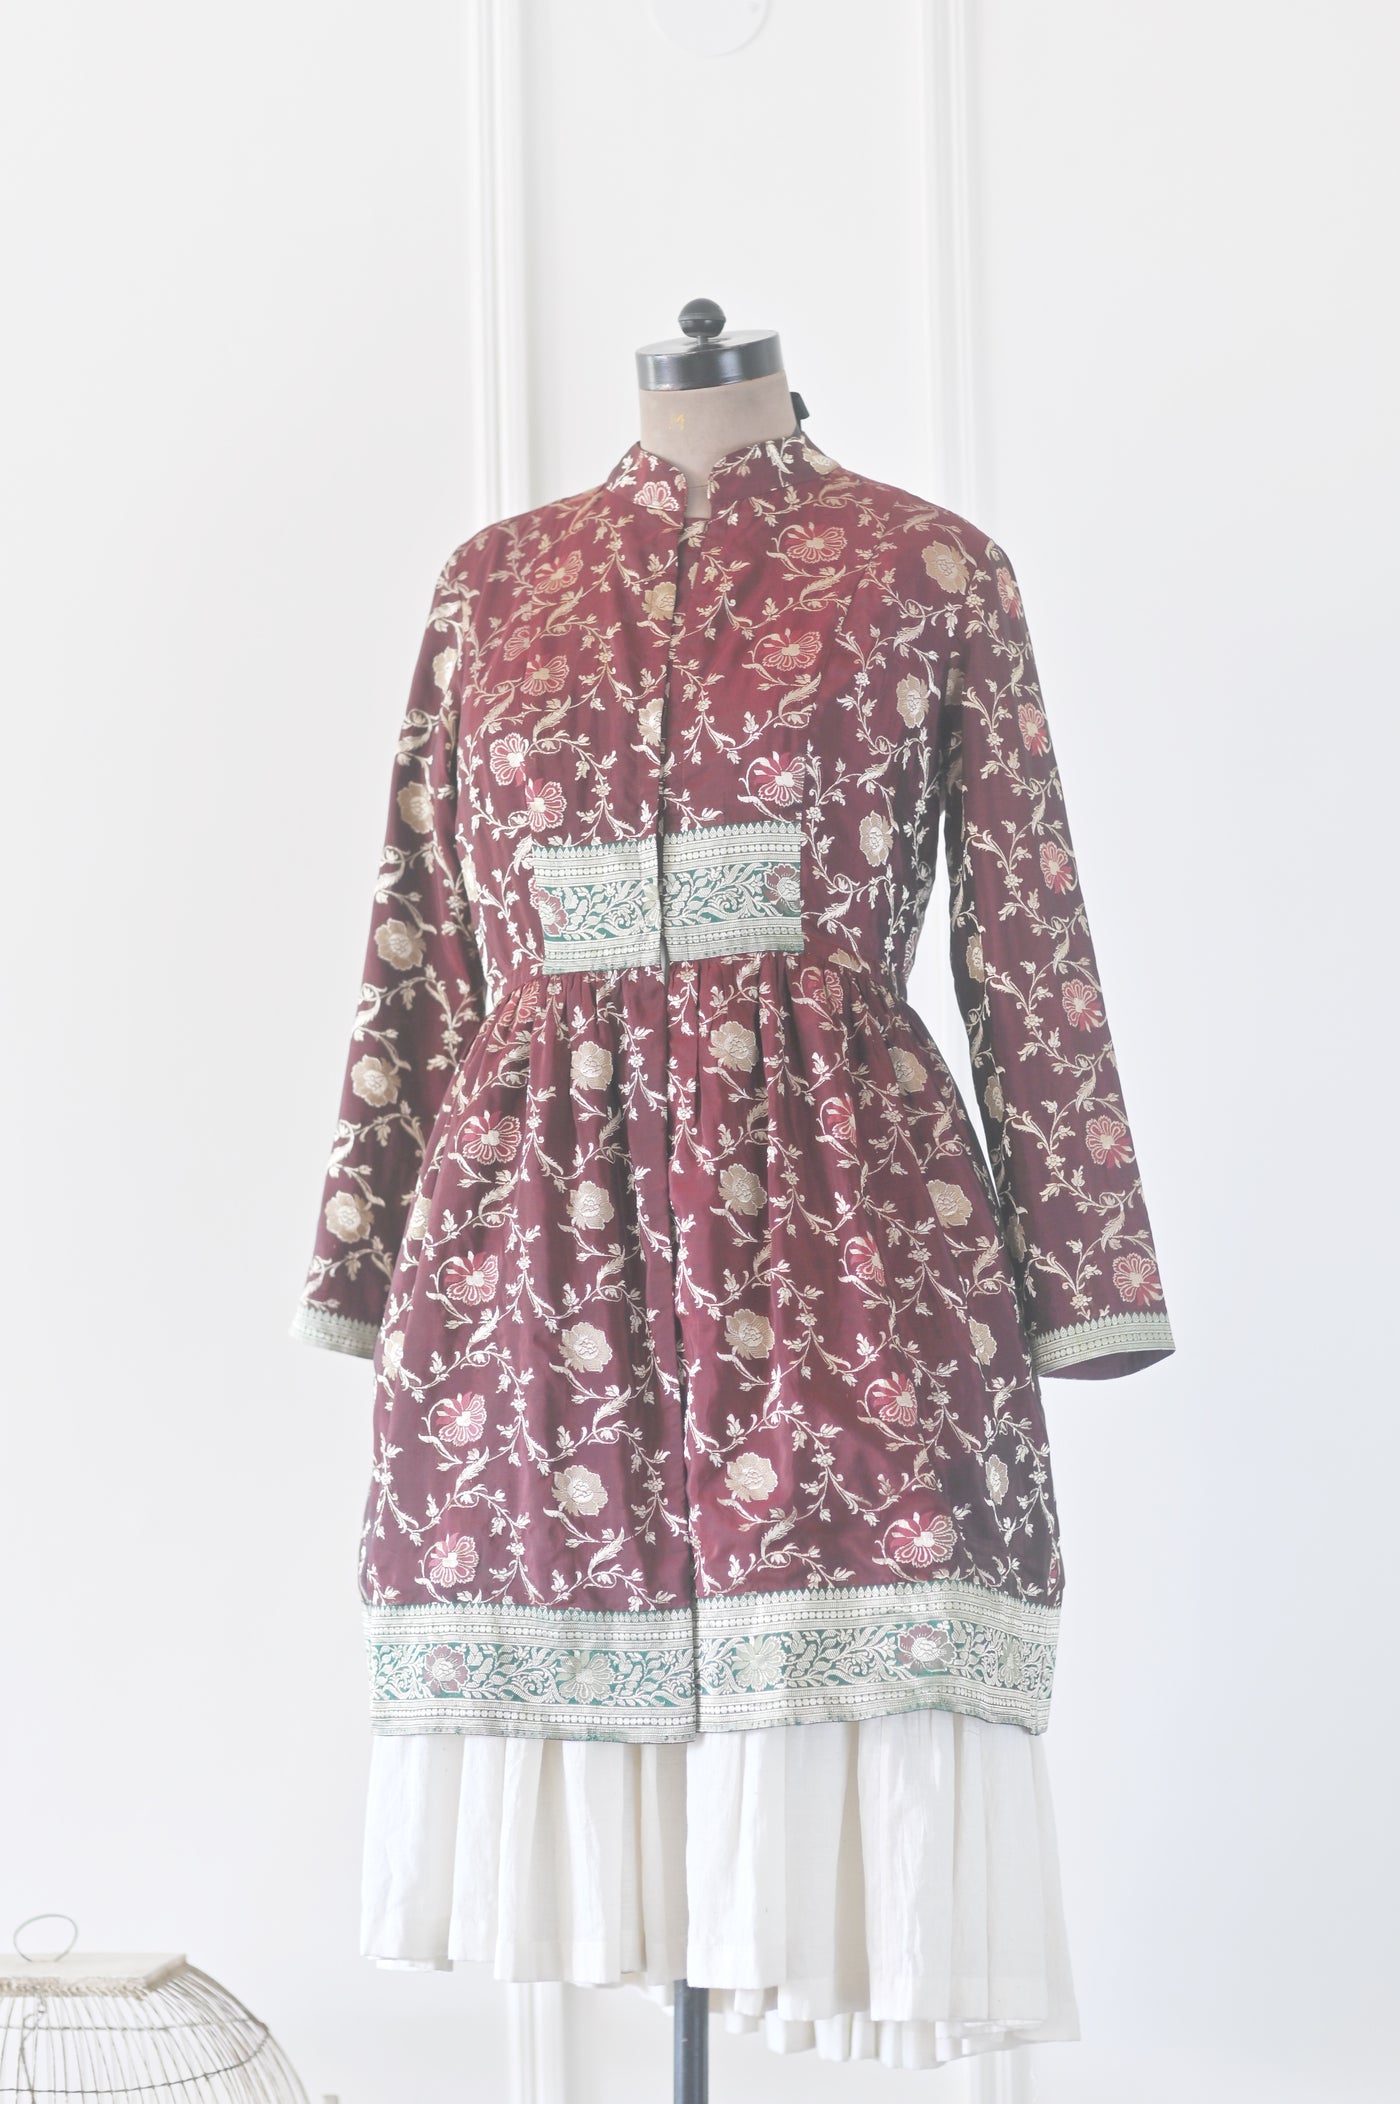 Piku, Size Large vintage Zari Silk Saree Long Coat in Brown, One of a Kind